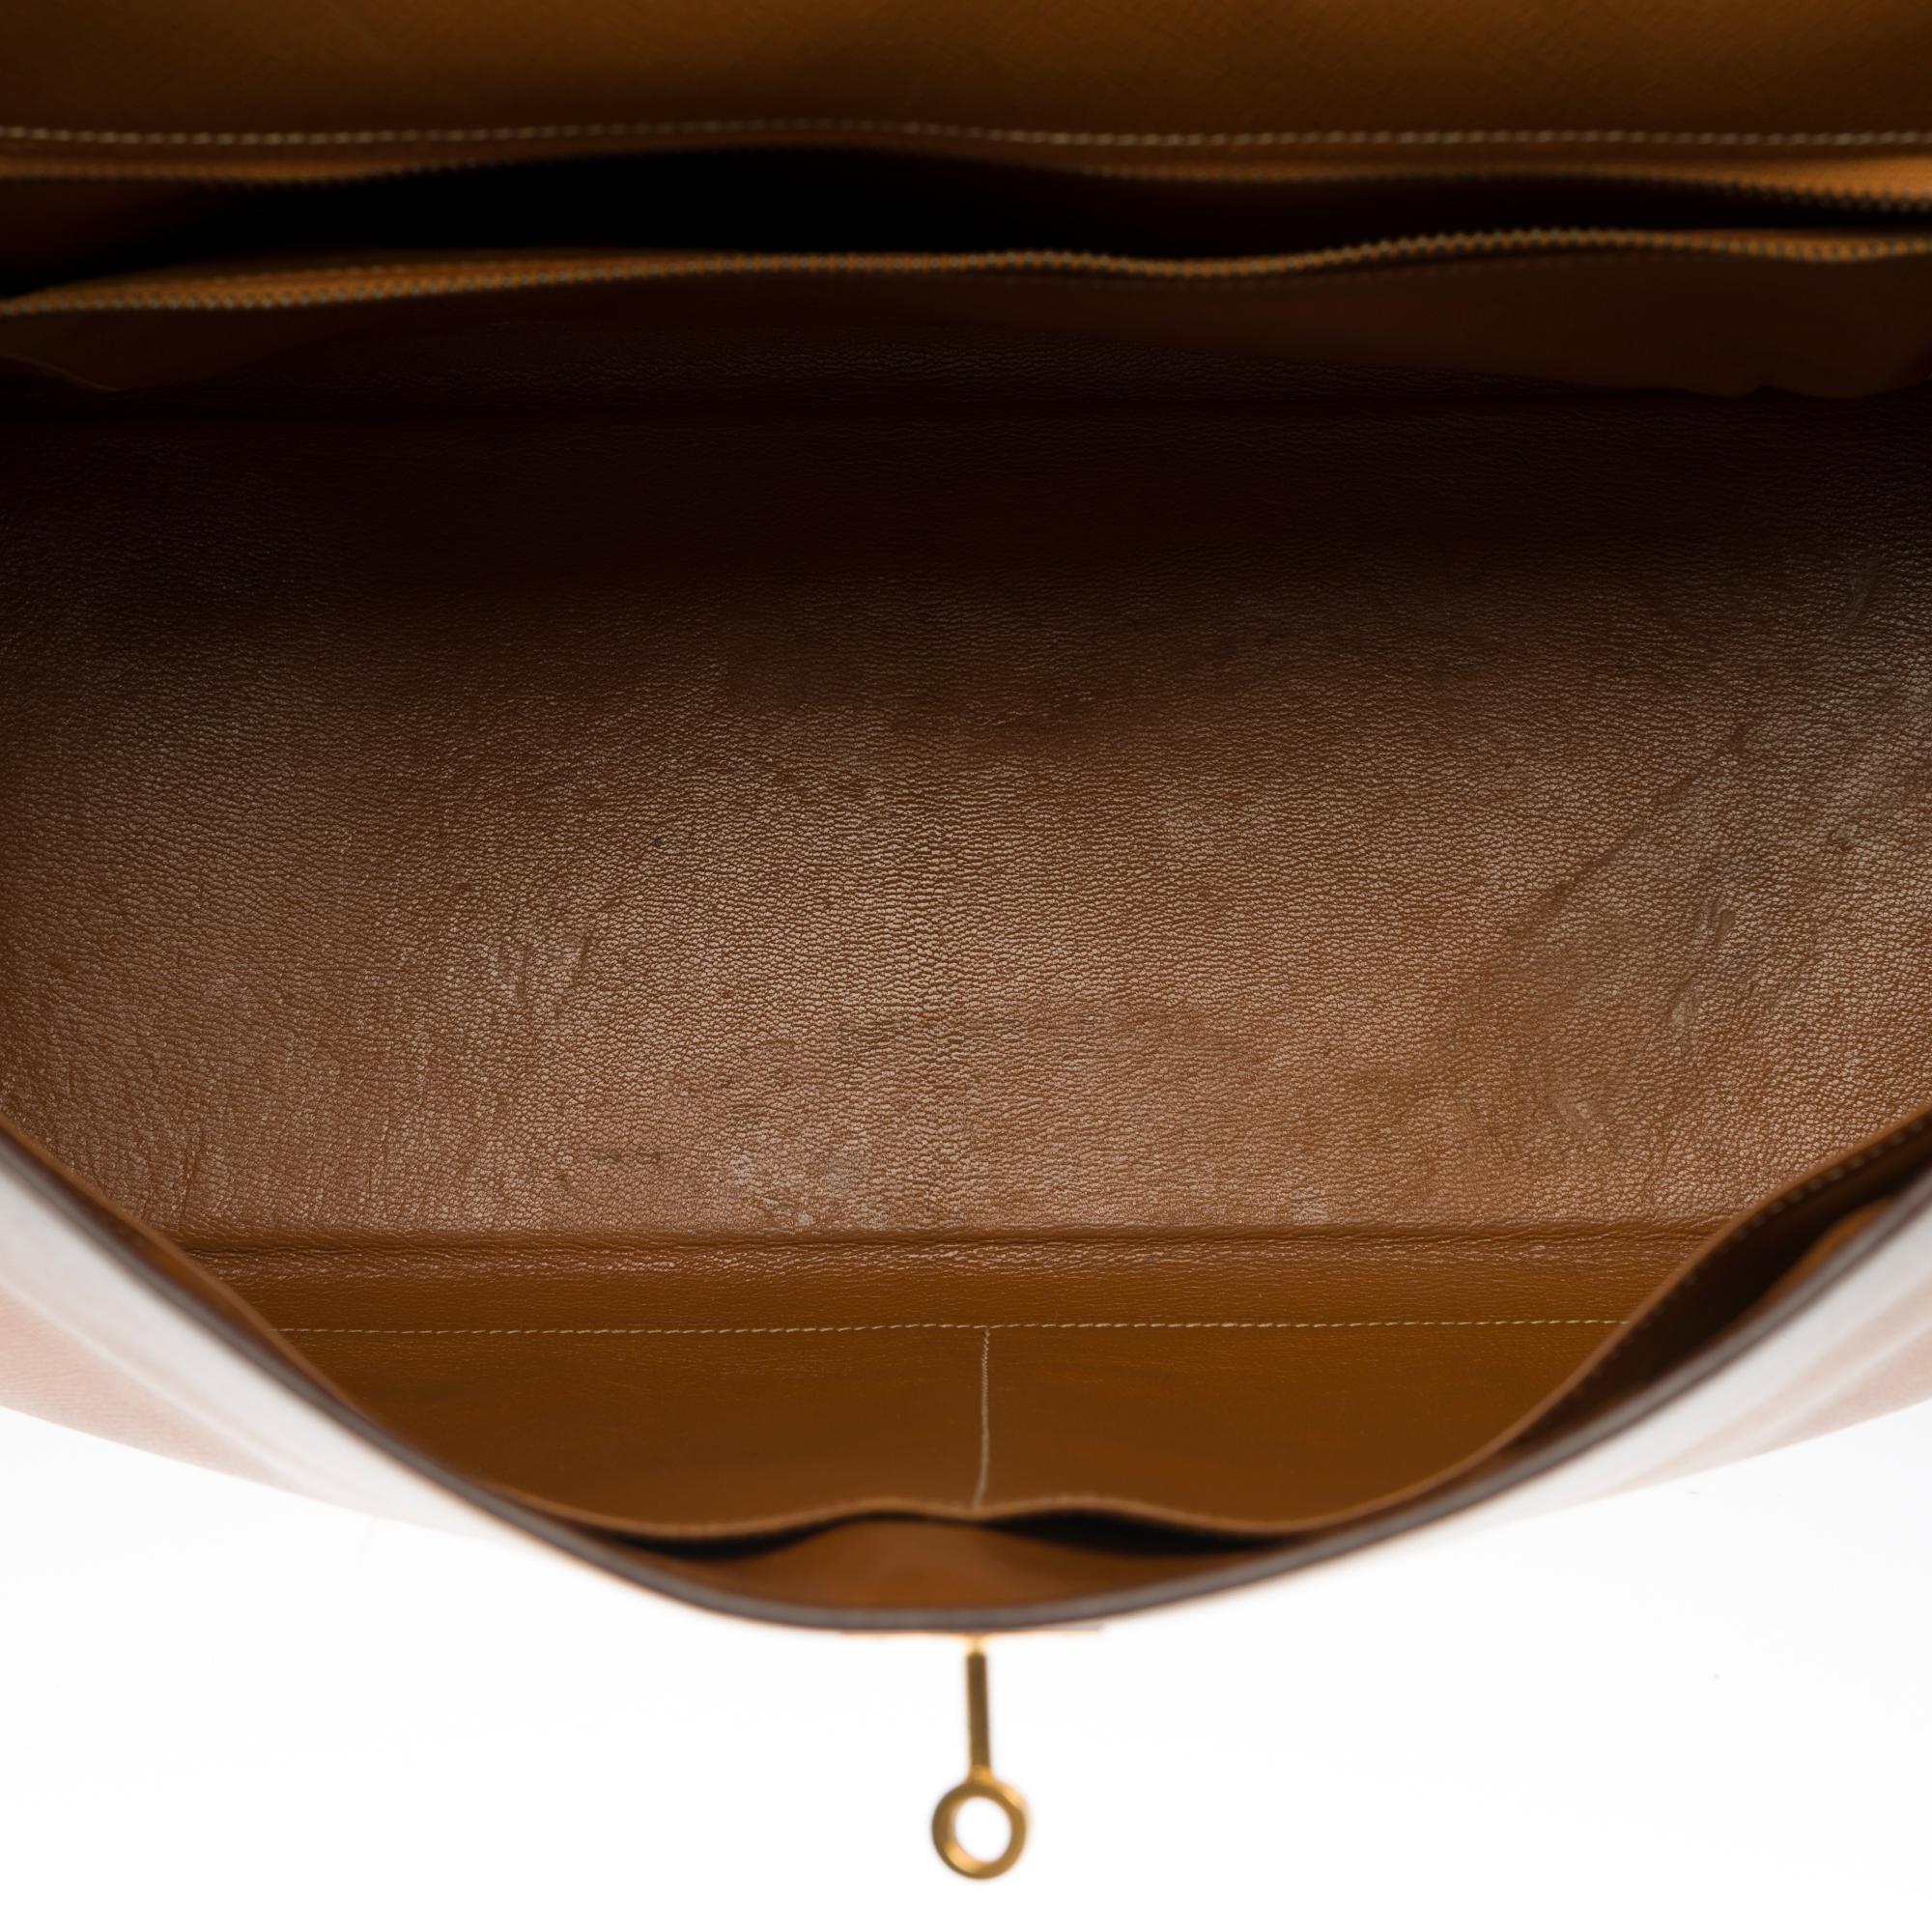 Hermes Kelly 40 retourne handbag strap in Gold Courchevel leather, GHW 2